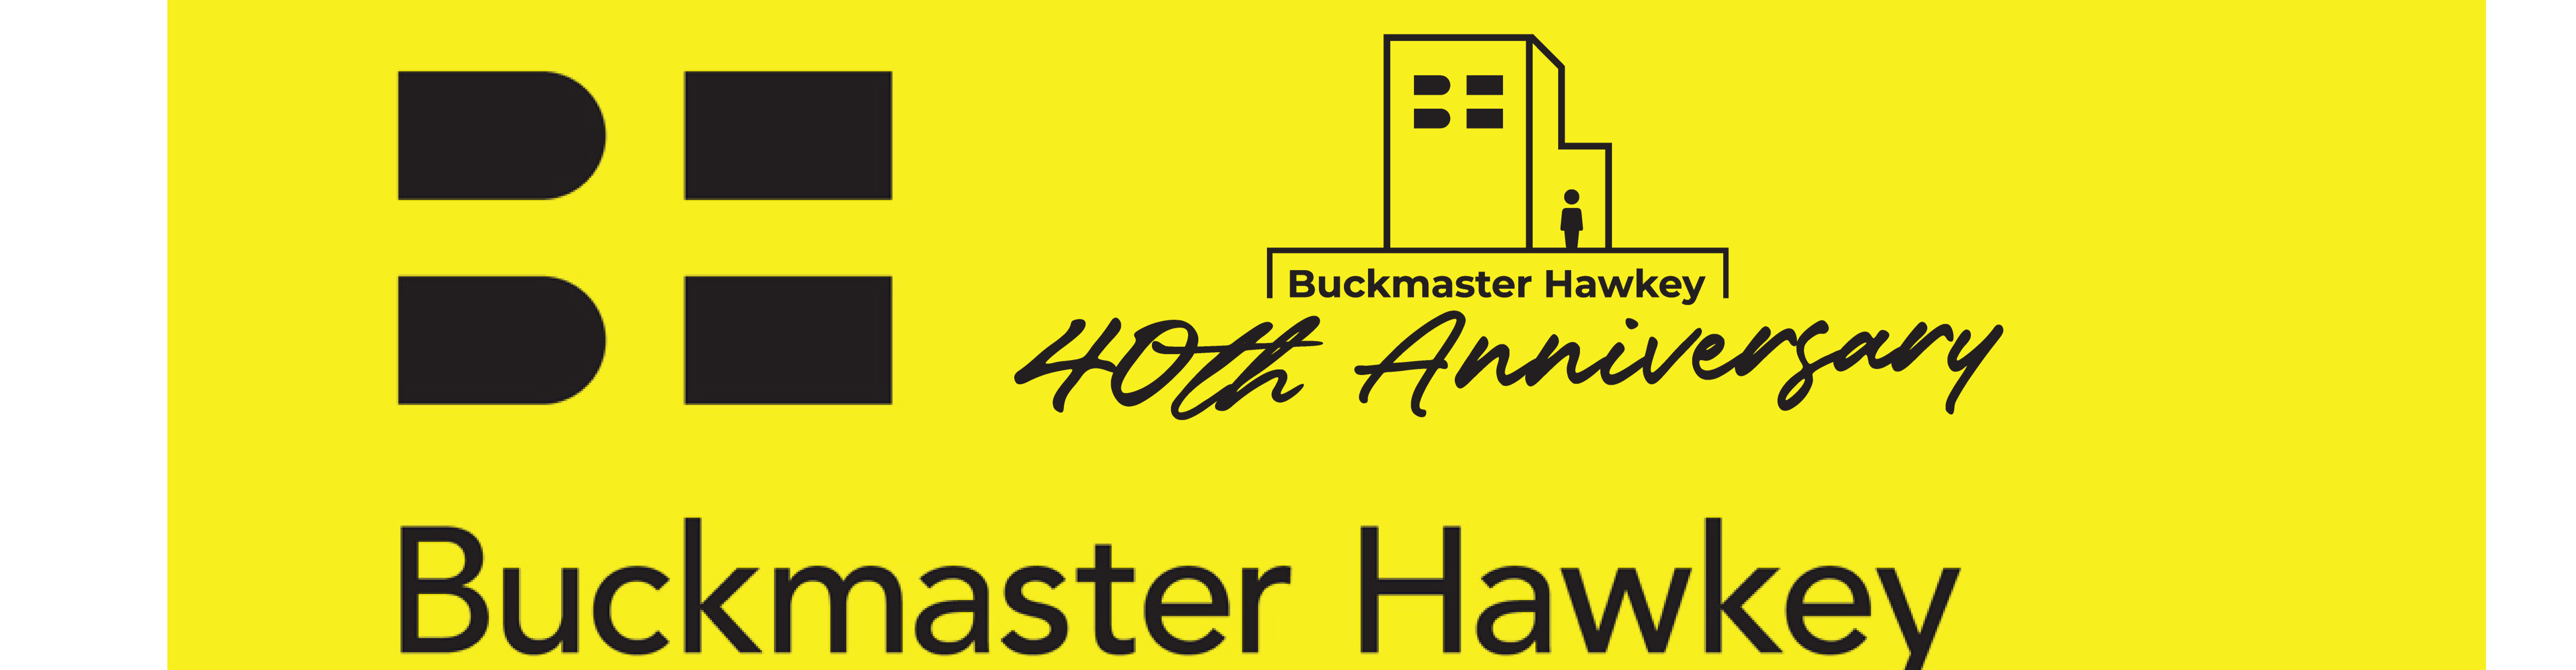 Buckmaster Hawkey banner